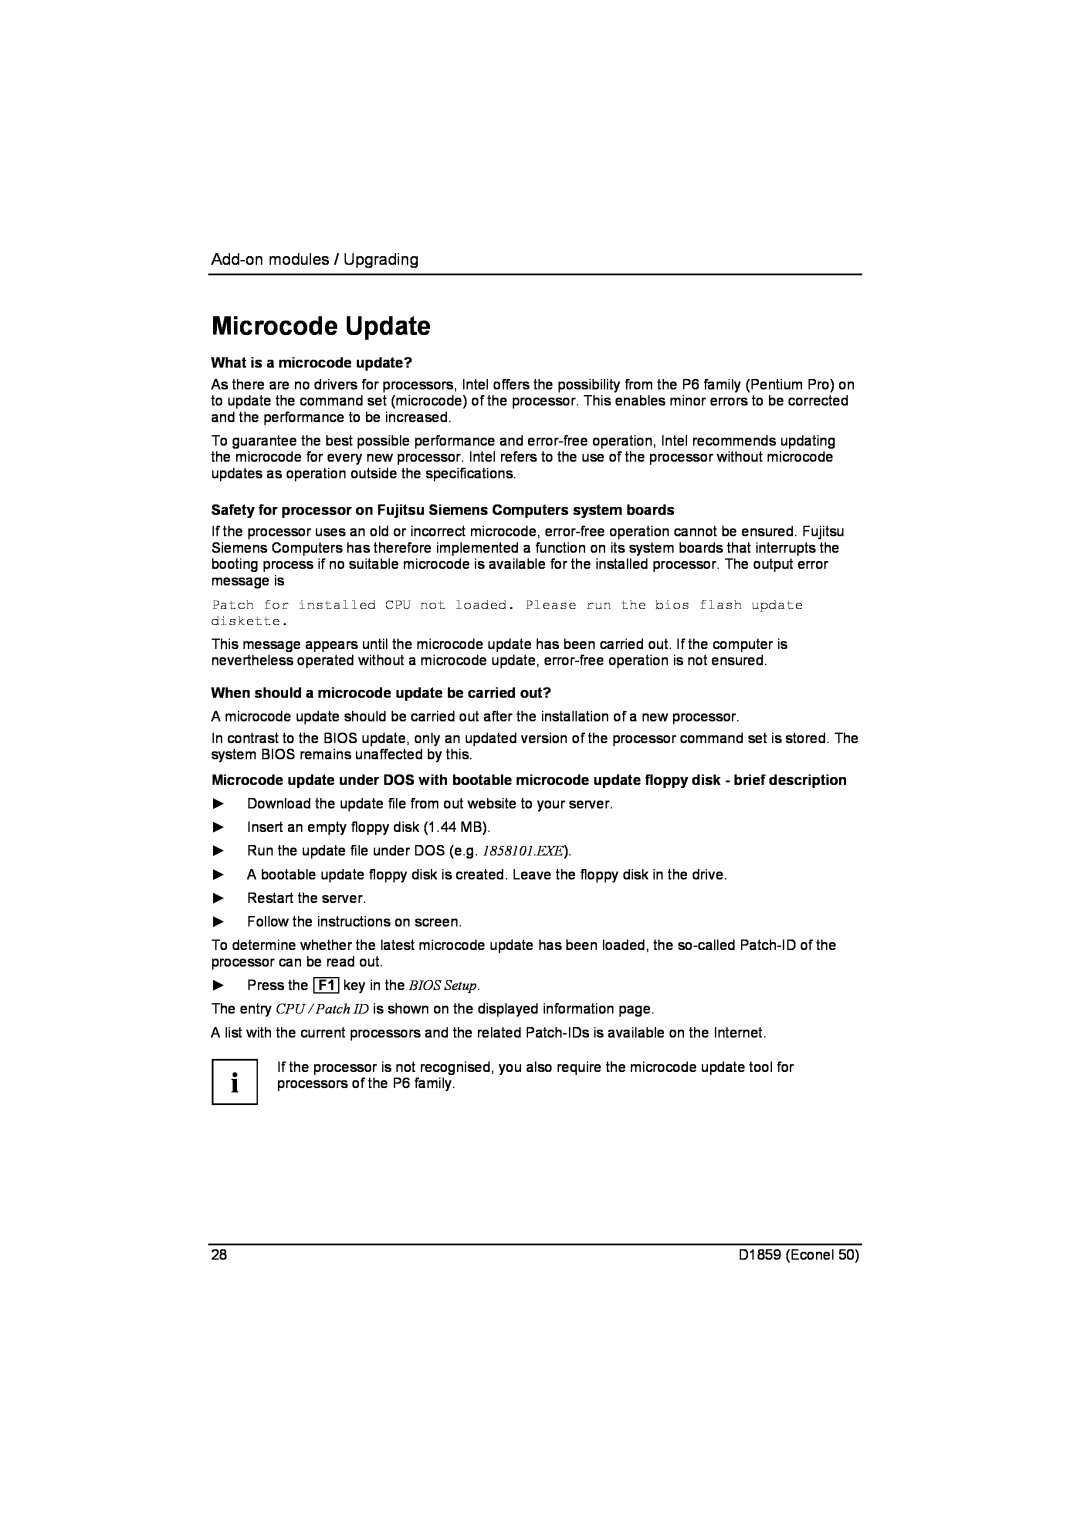 Fujitsu D1859 technical manual Microcode Update, Add-on modules / Upgrading, What is a microcode update? 